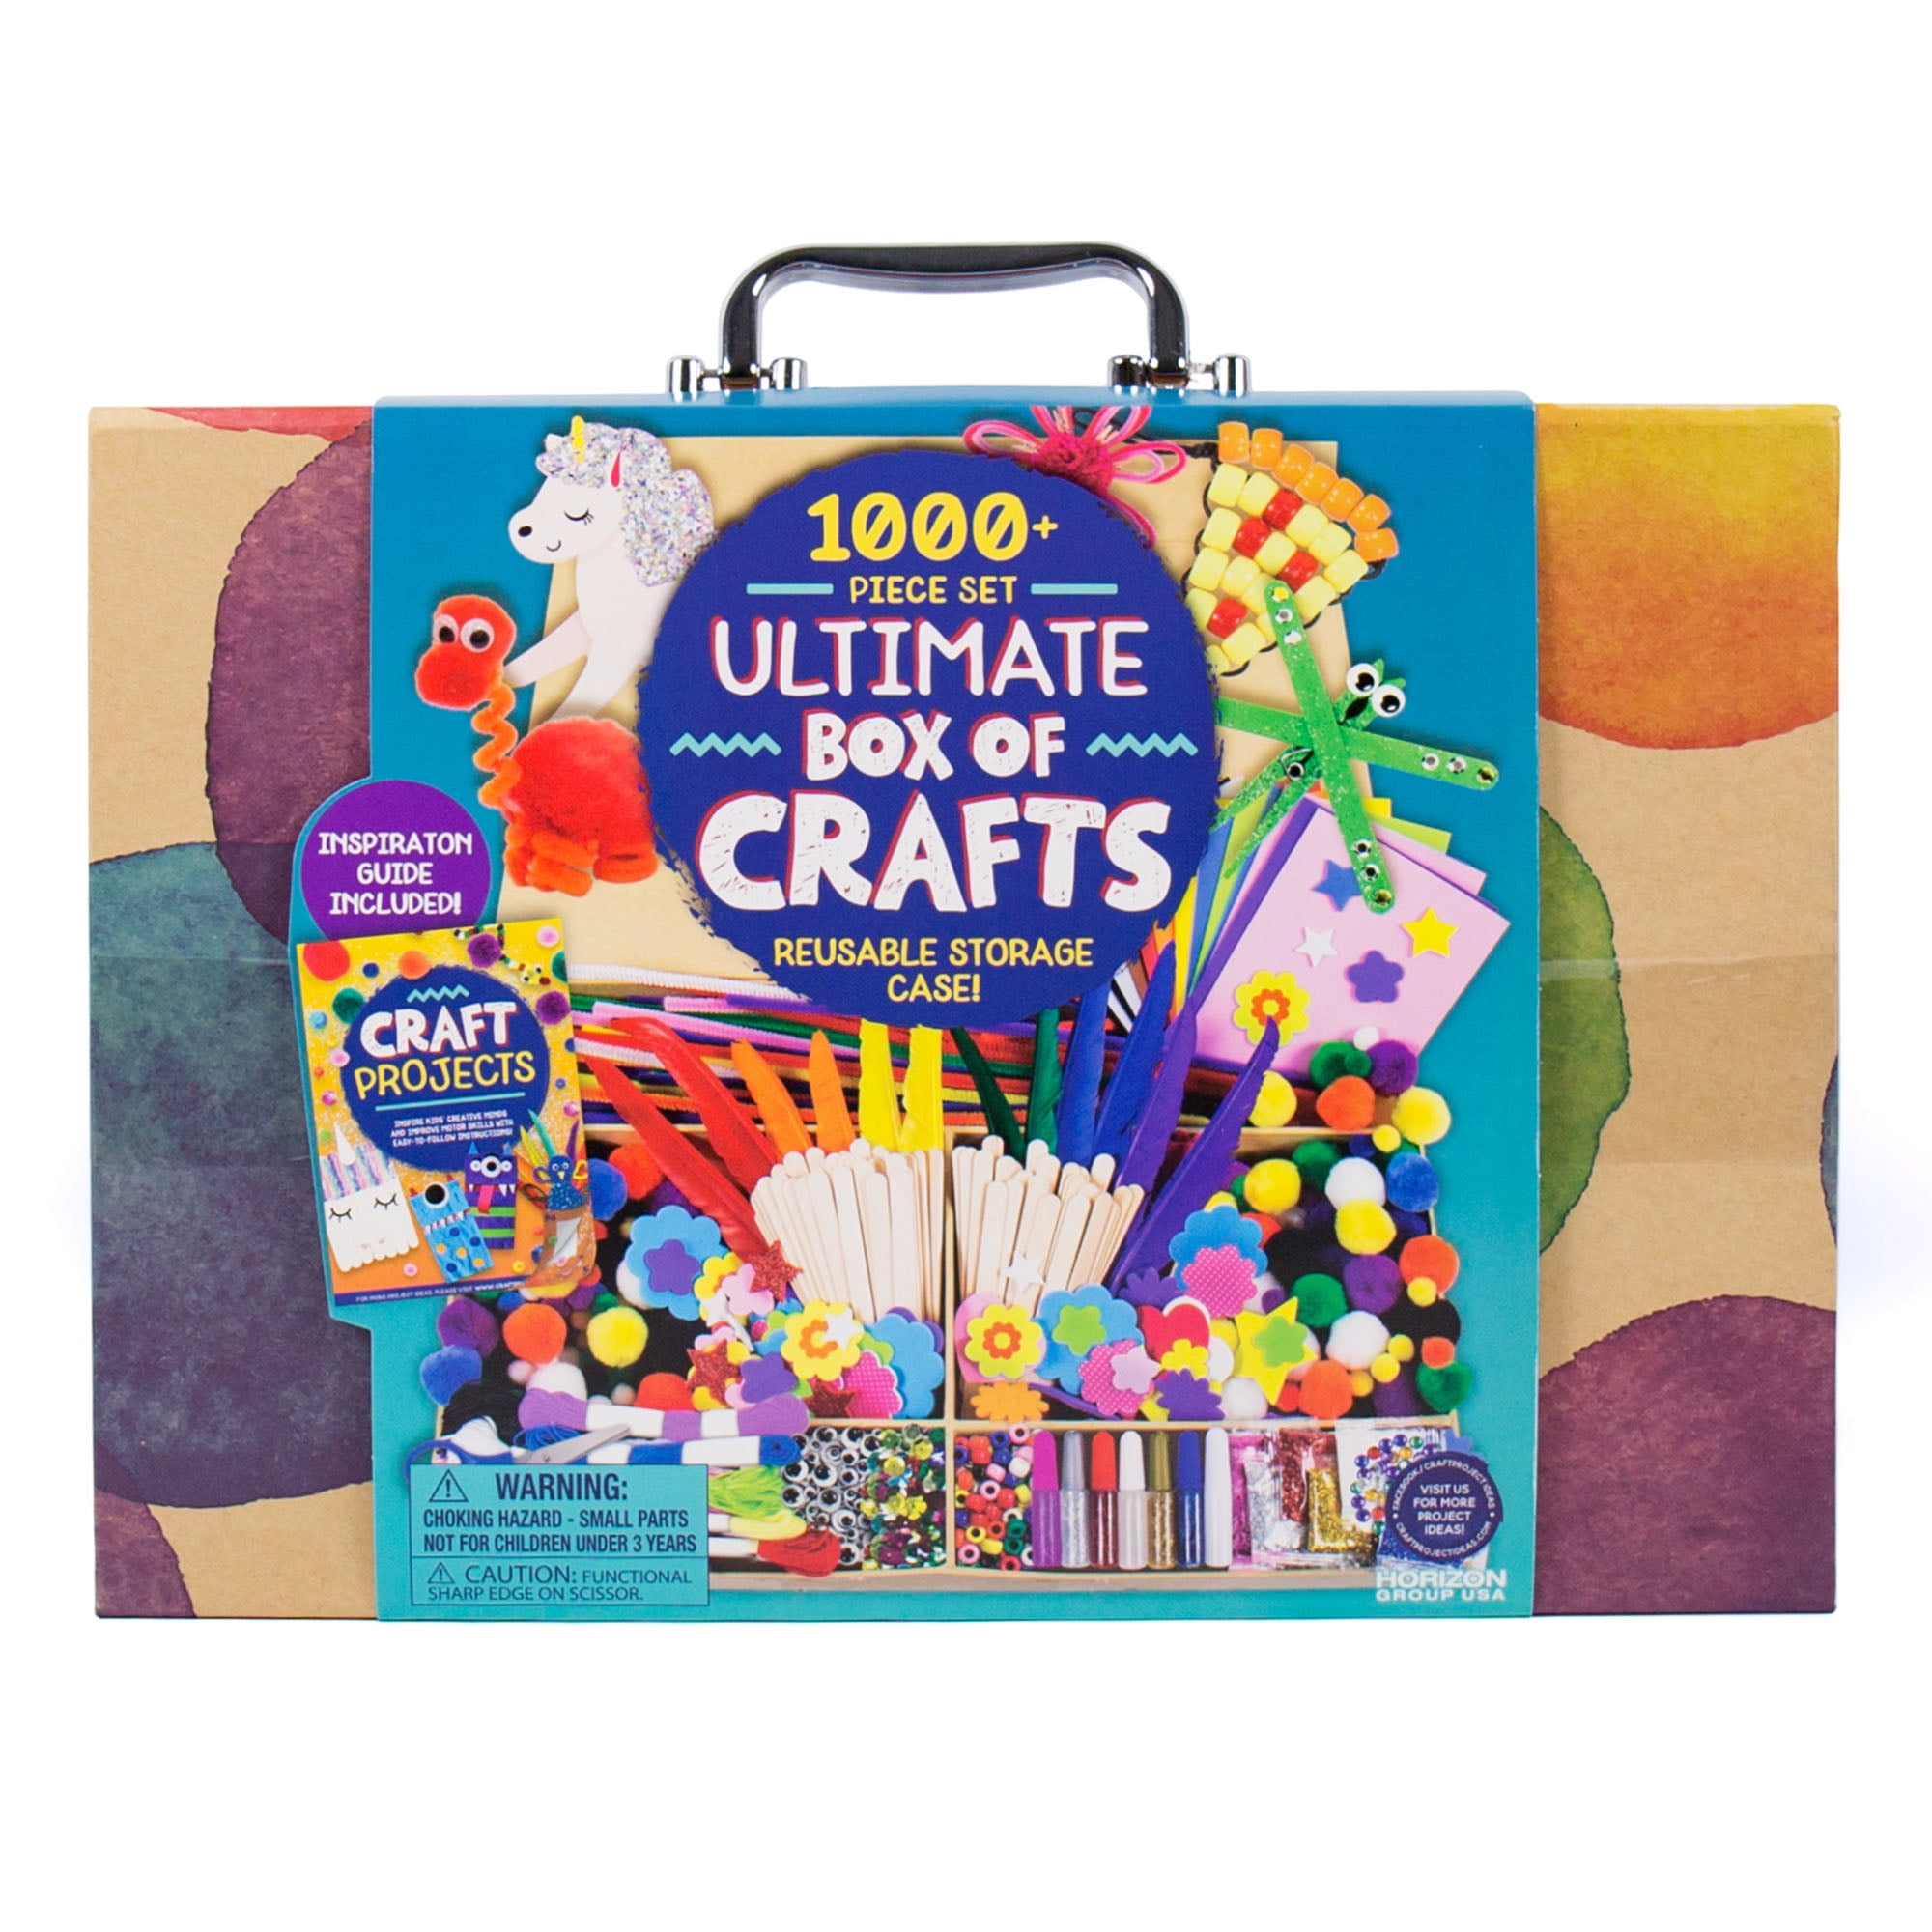 Original Stationery Jumbo Playdate Craft Kit, Over 1000 Fun Arts & Crafts  Supplies to Make Slime Art & Kids Crafts, Ultimate Craft Set for Crafty Kids